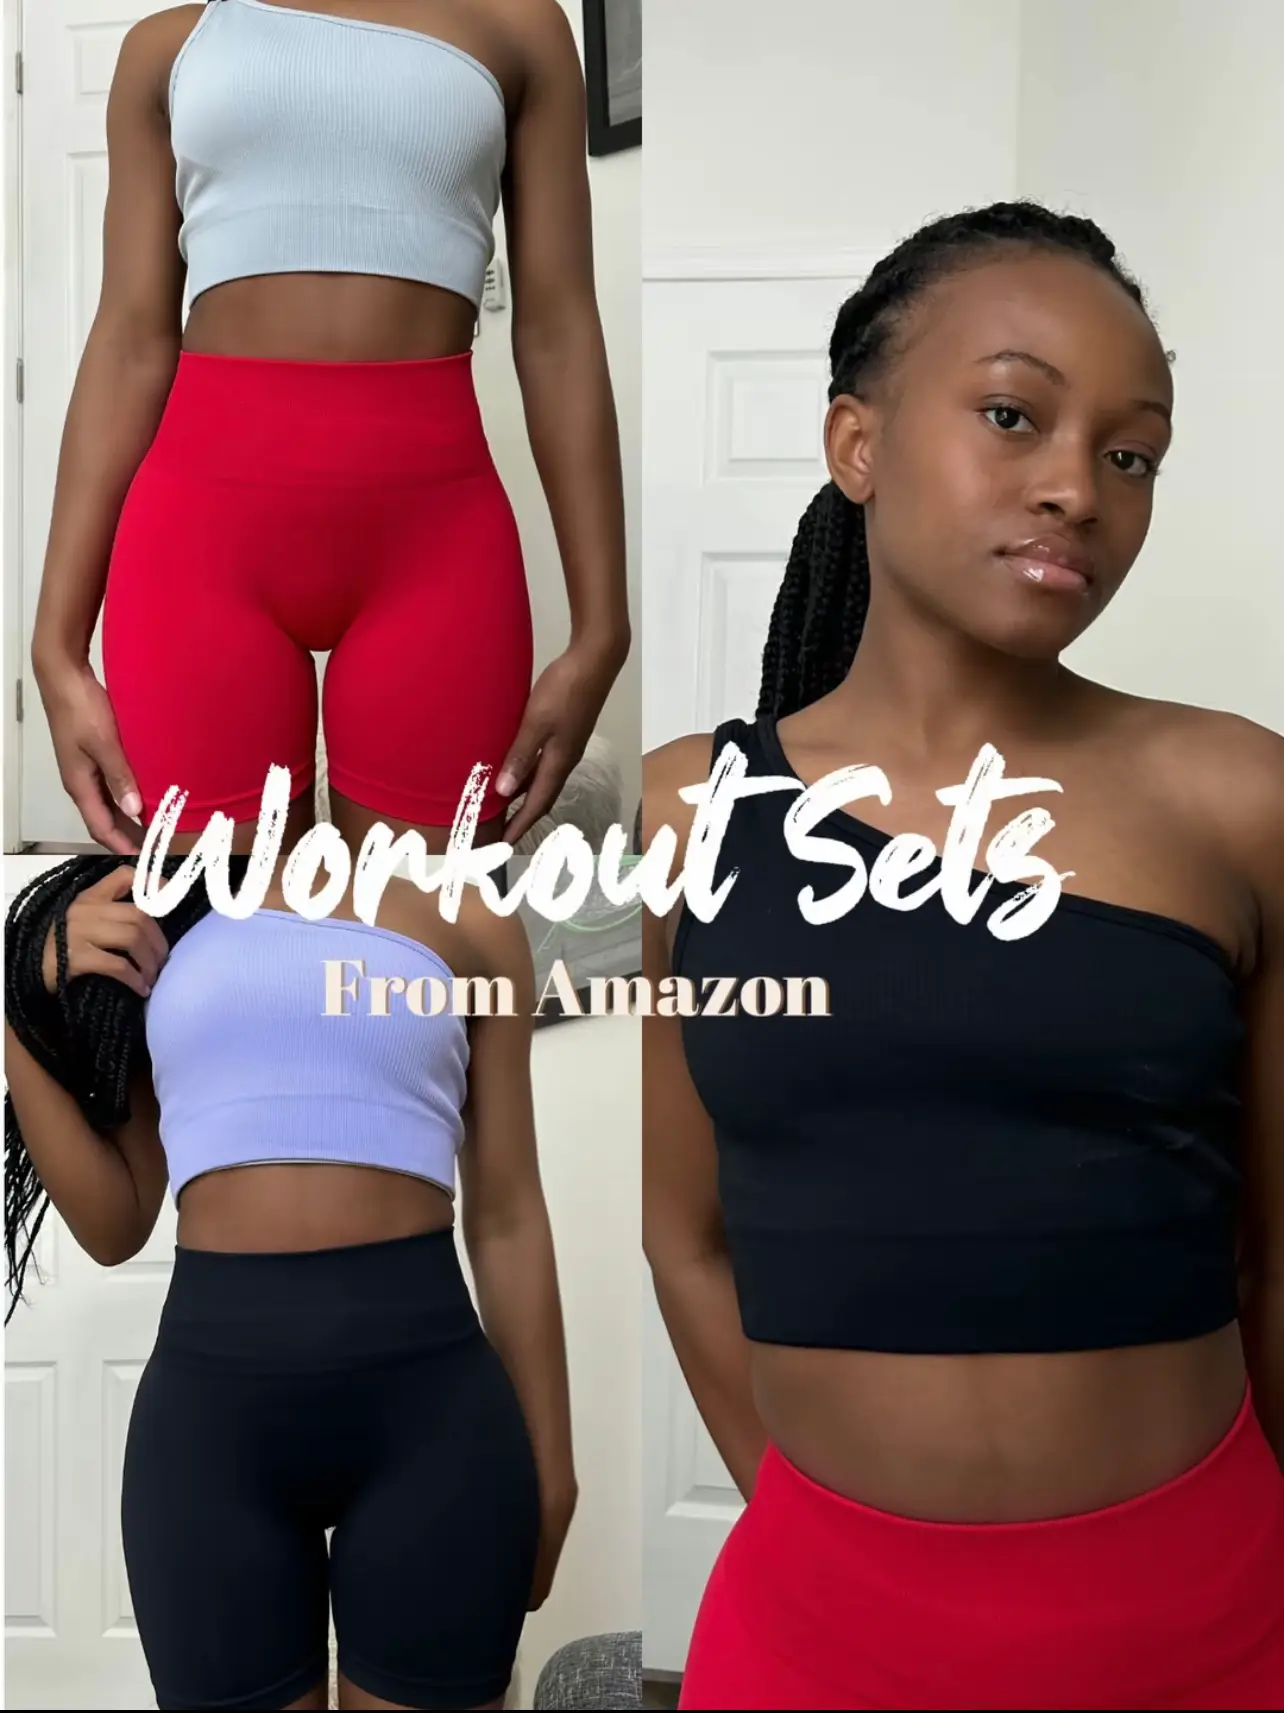 All under “Best workout sets” #gymclothes #gymfits #,  workout sets